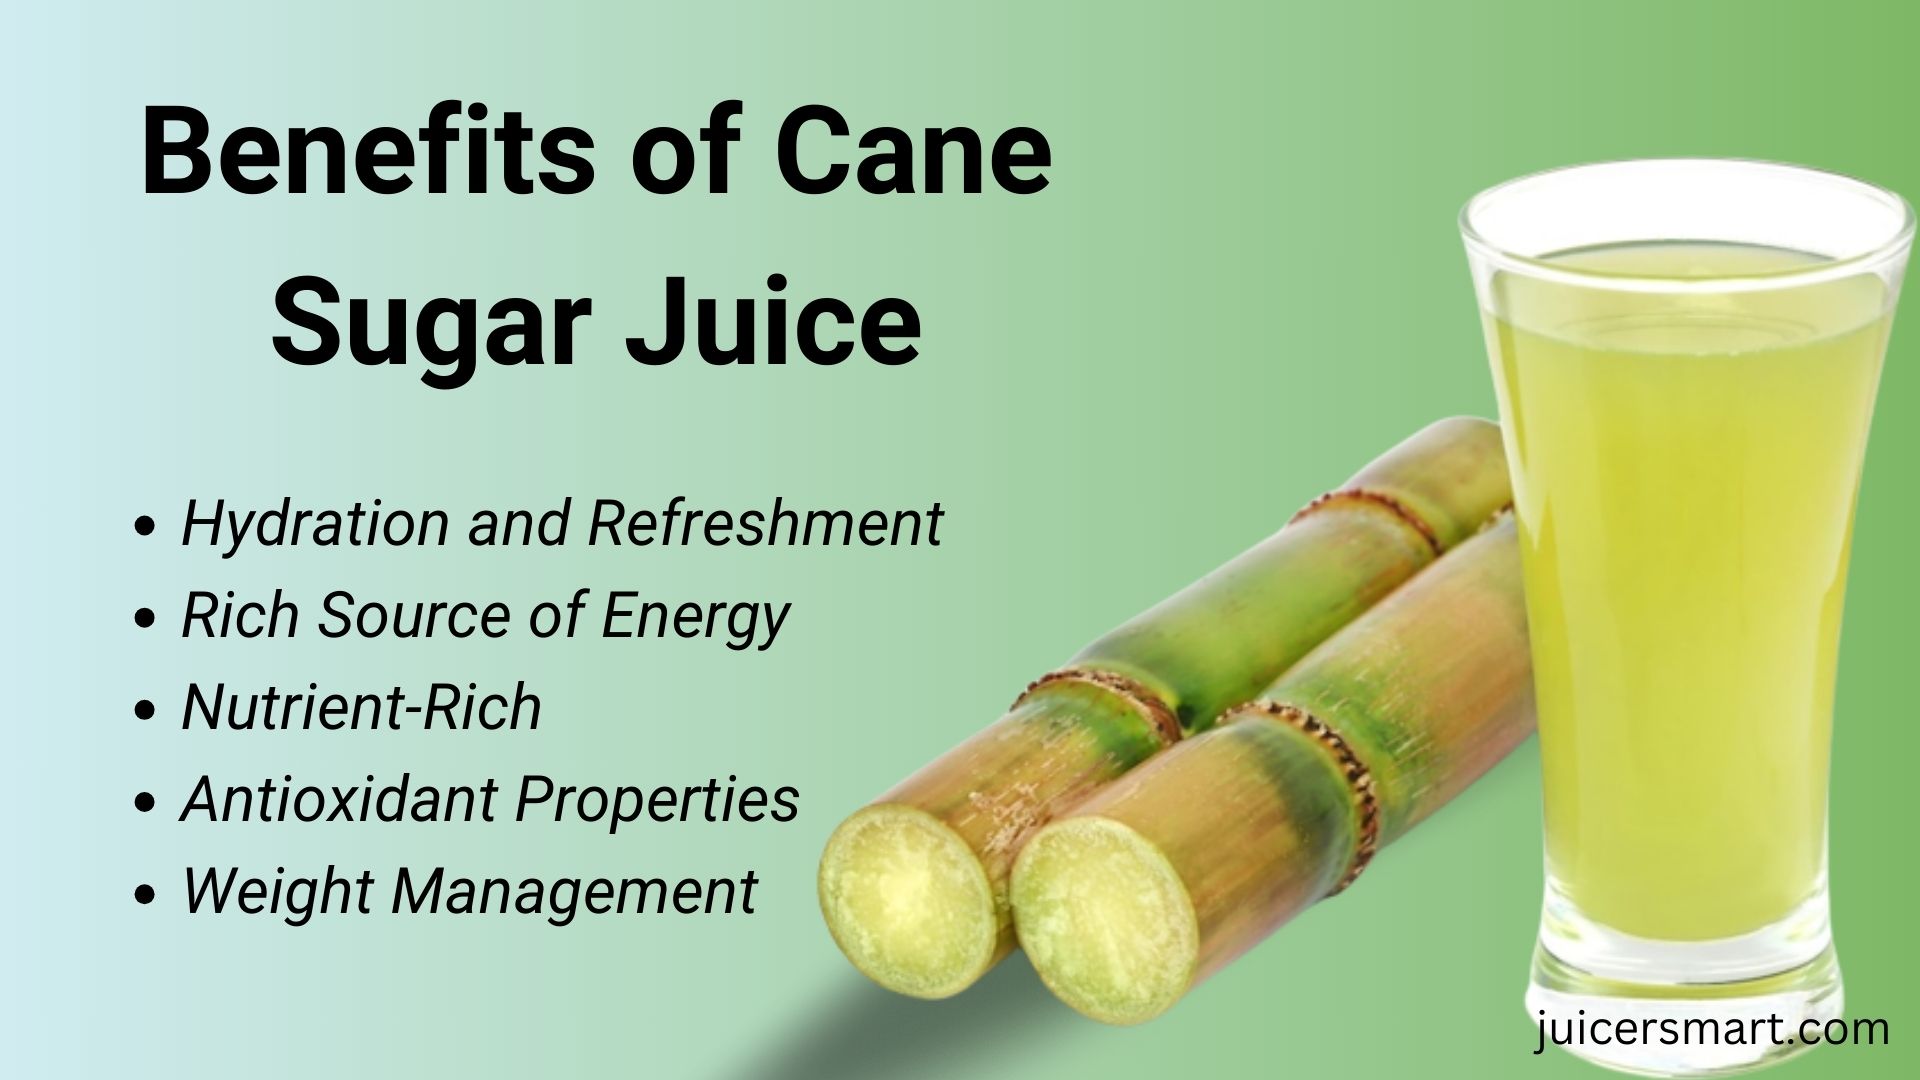 Benefits of Cane Sugar Juice